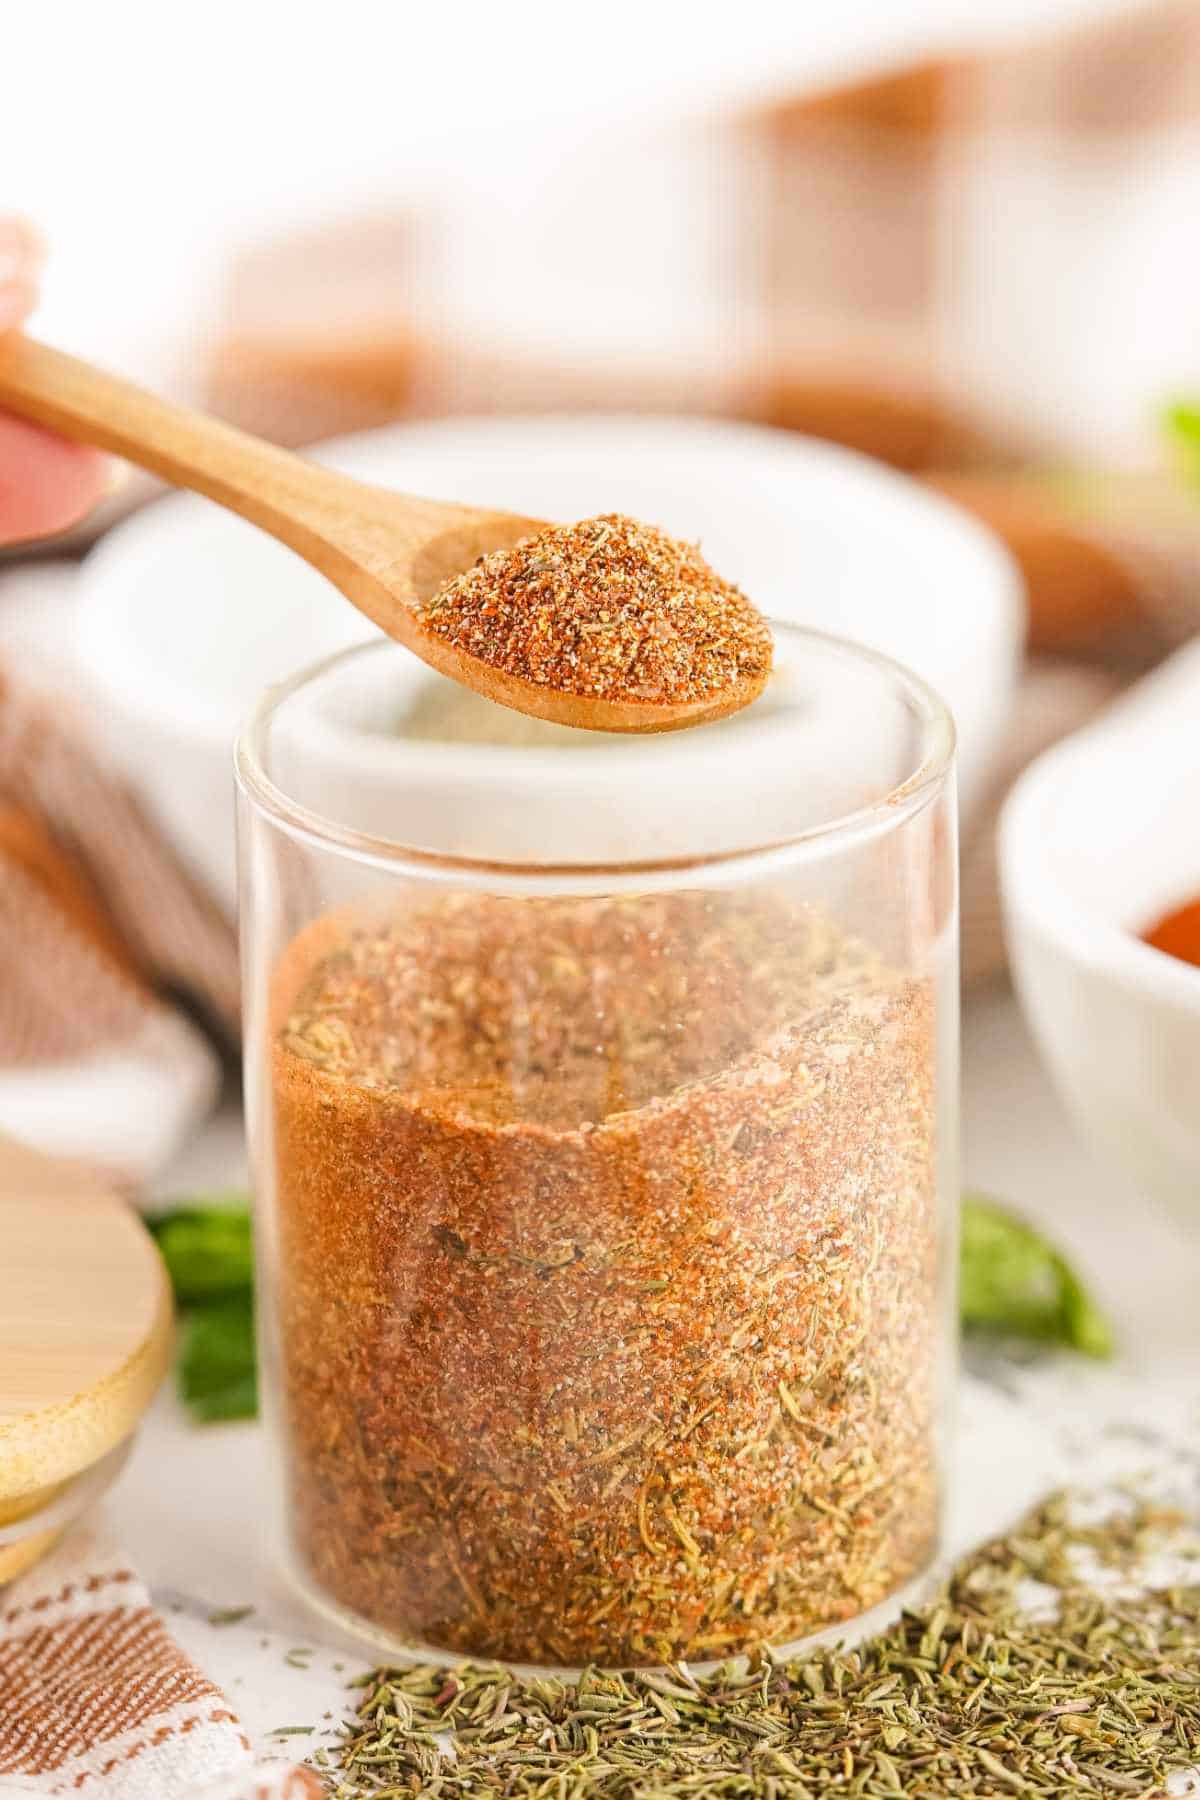 wide mouth spice storage jar filled with turkey rub seasoning blend.